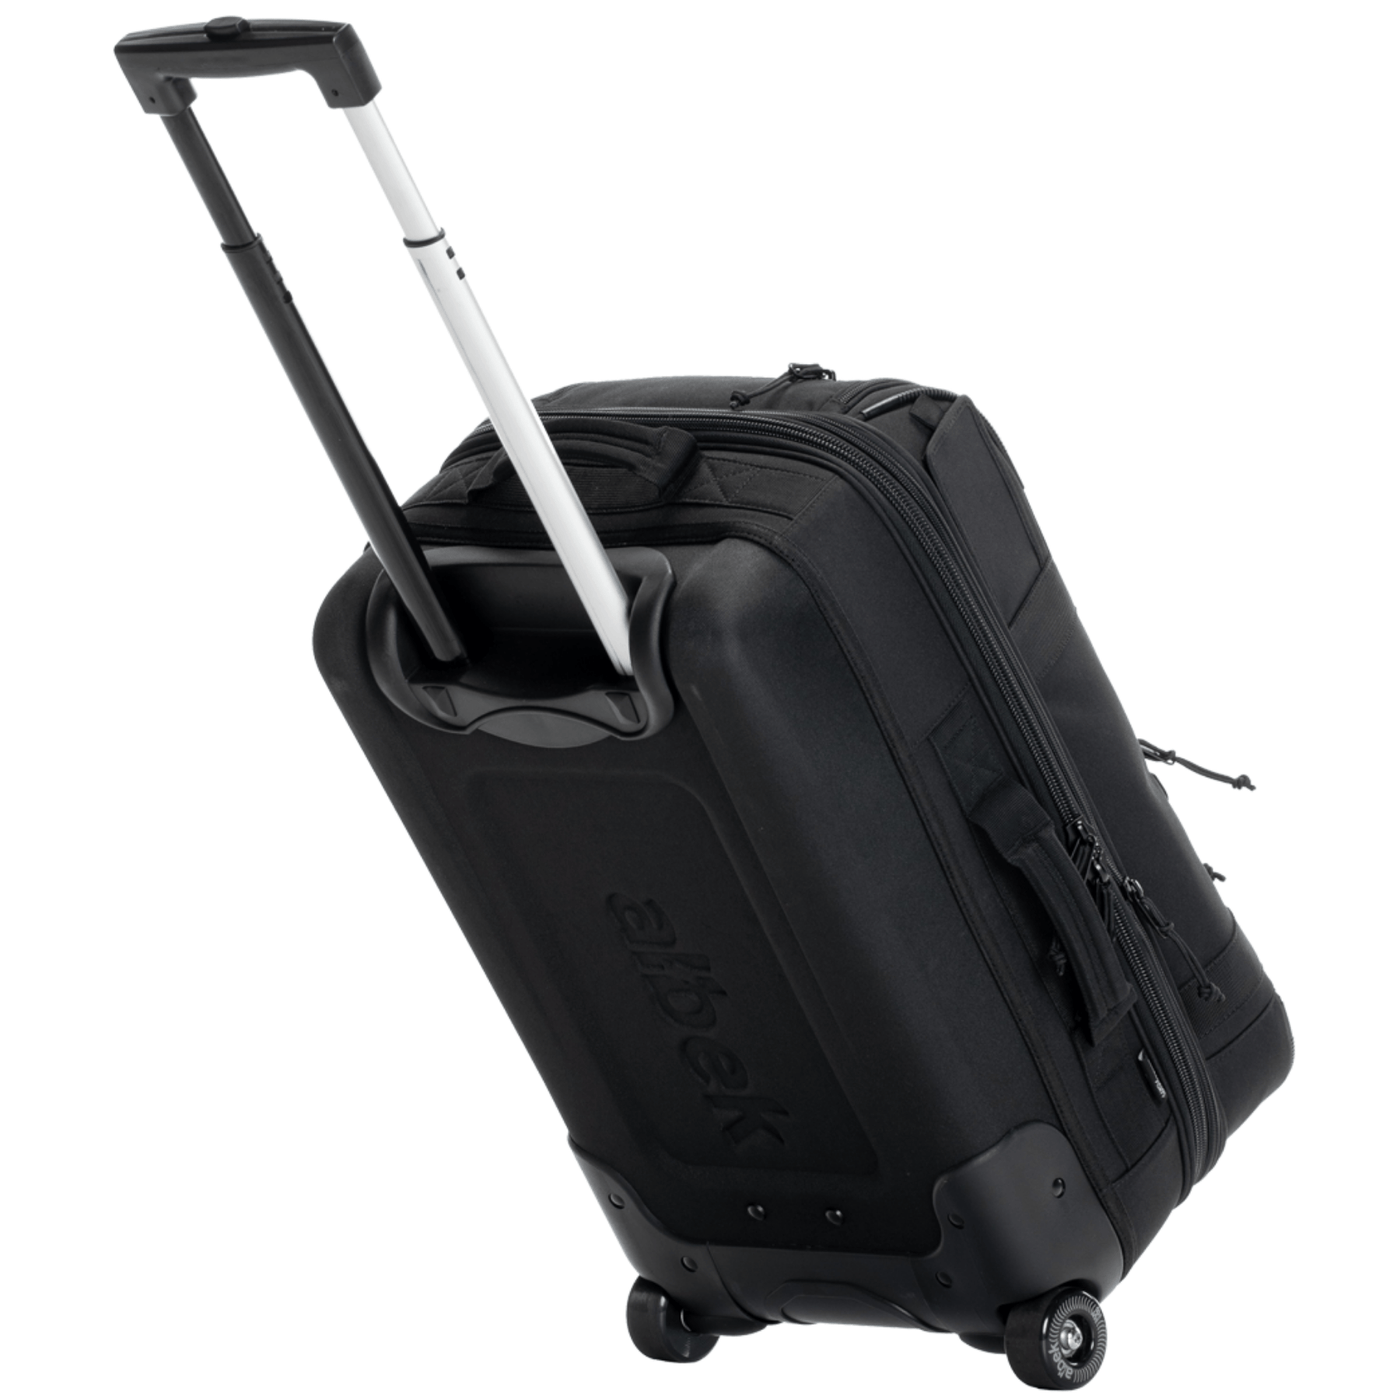 Albek Travel Luggage Short Haul - Black